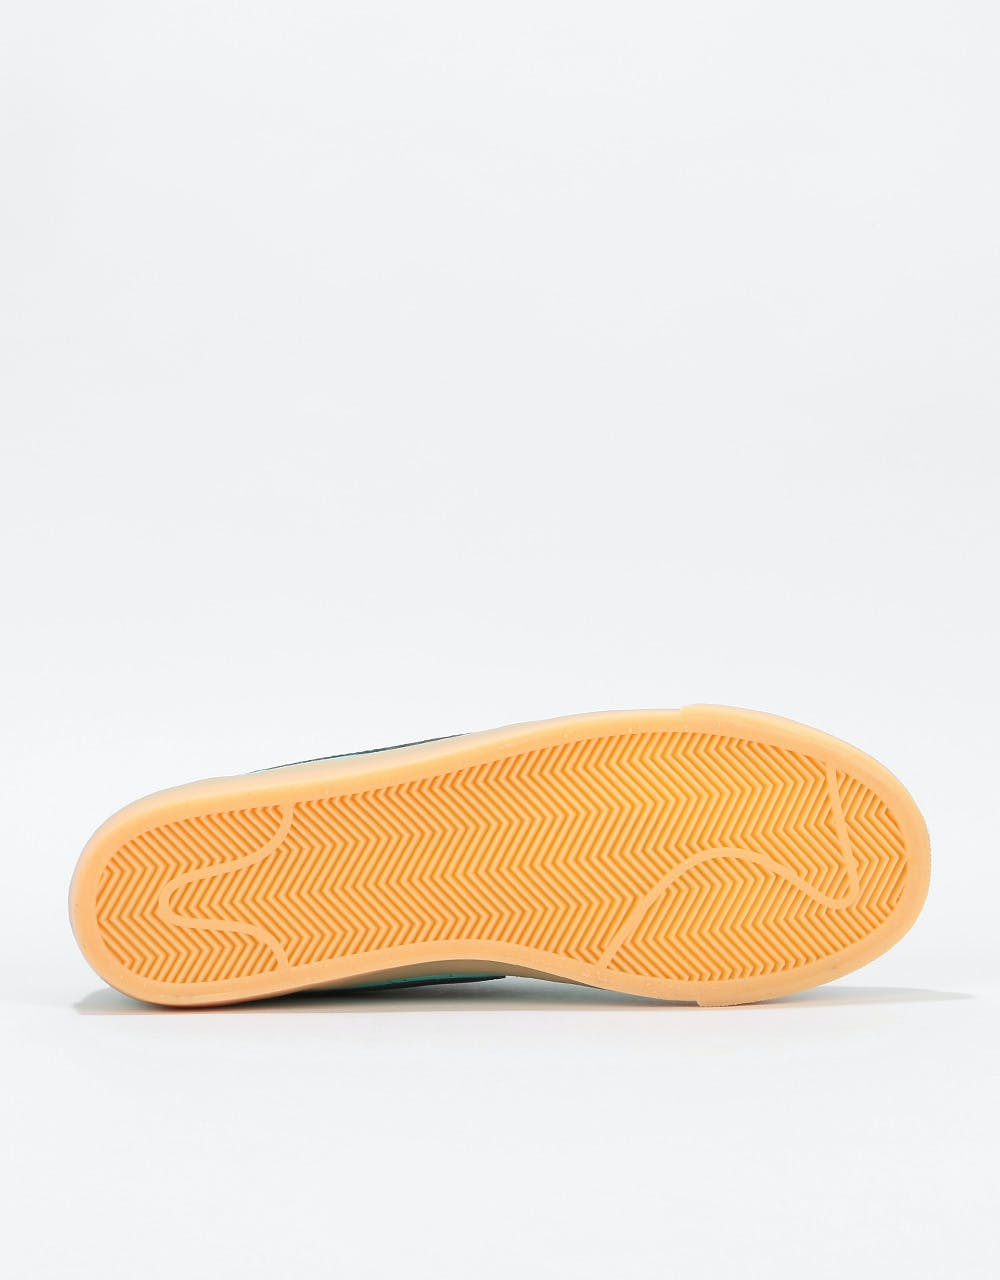 Nike SB Blazer Low GT Skate Shoes - Cabana/Obsidian